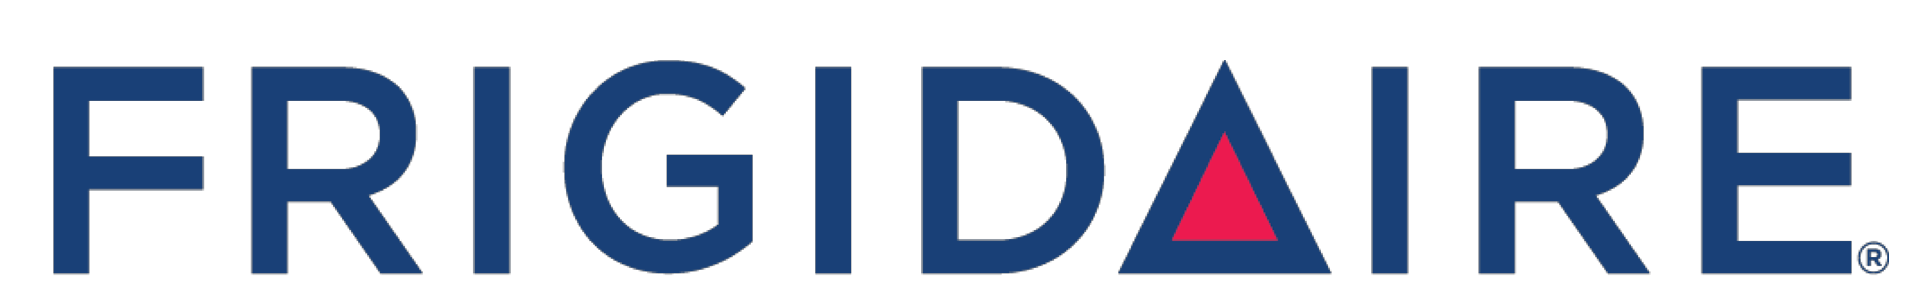 Frigidiare logo